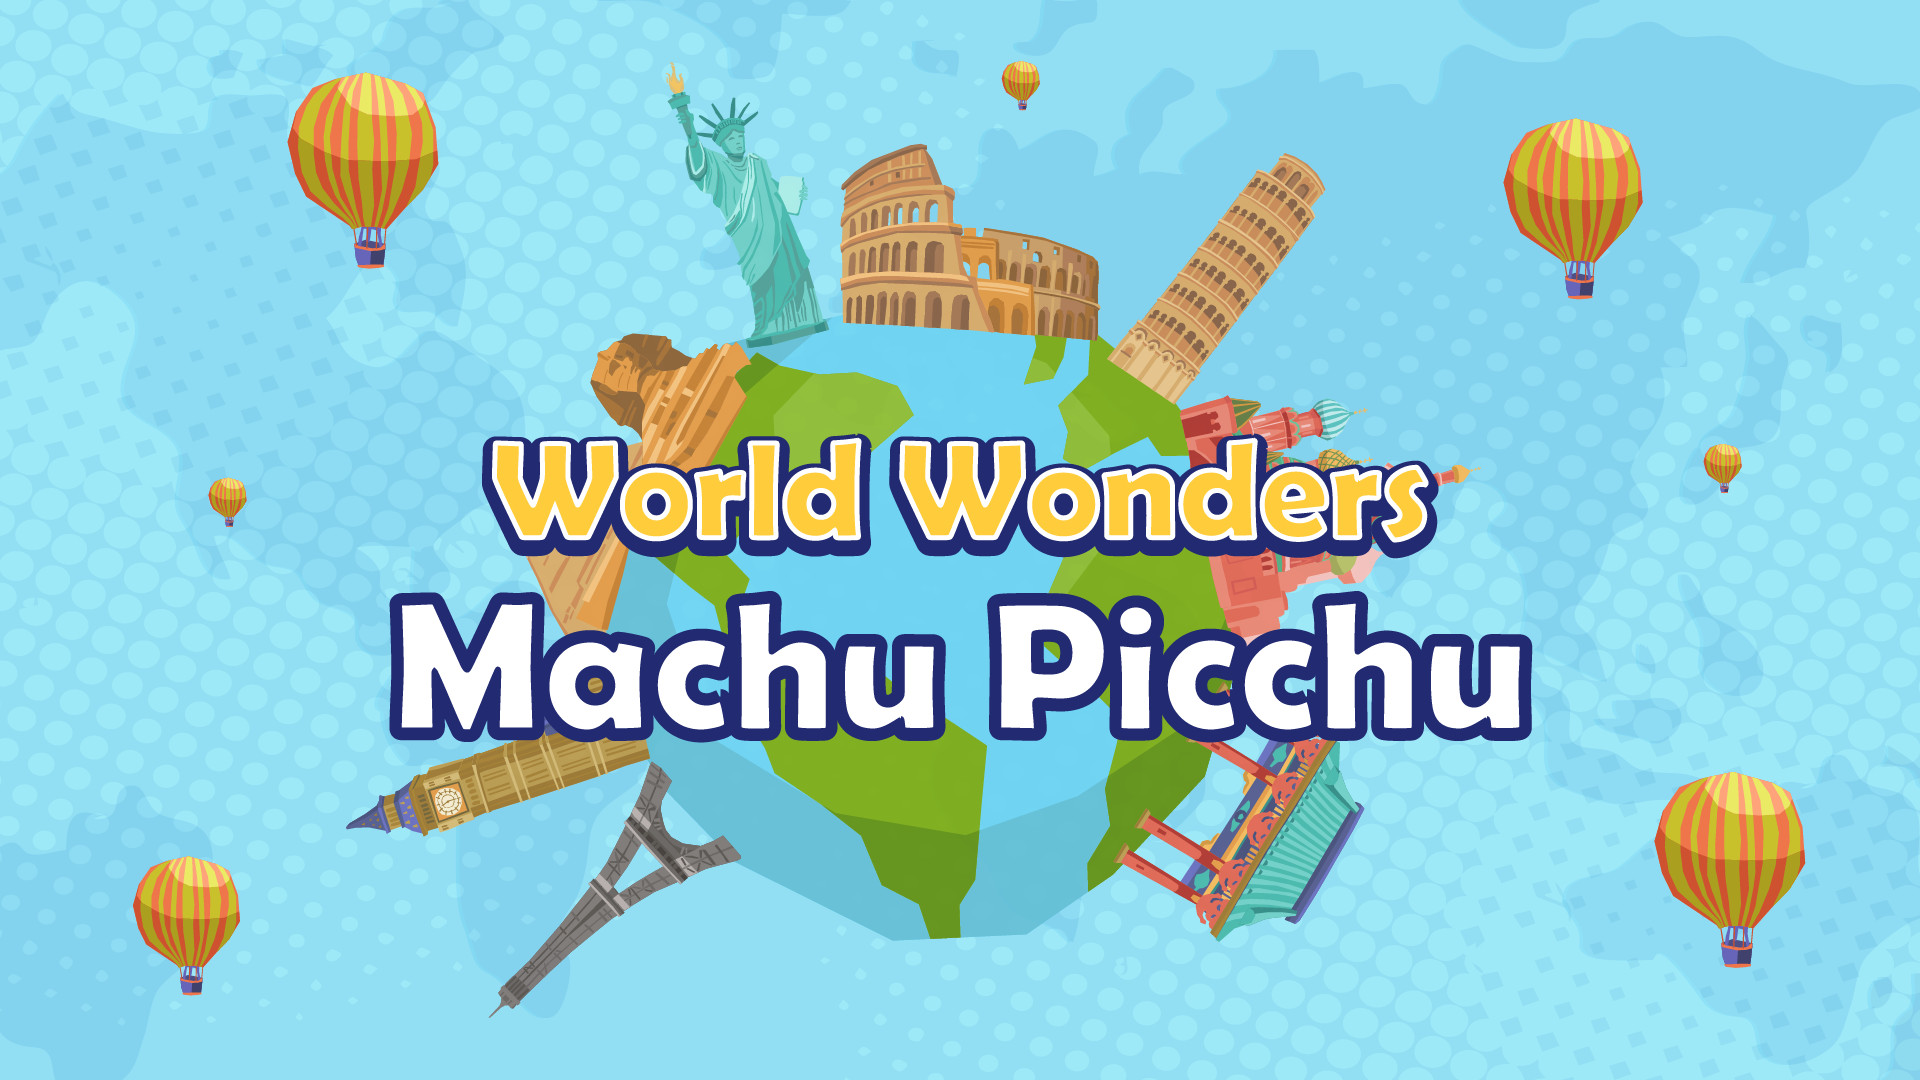 Machu Picchu Facts for Kids – 5 Magical Facts about Machu Picchu